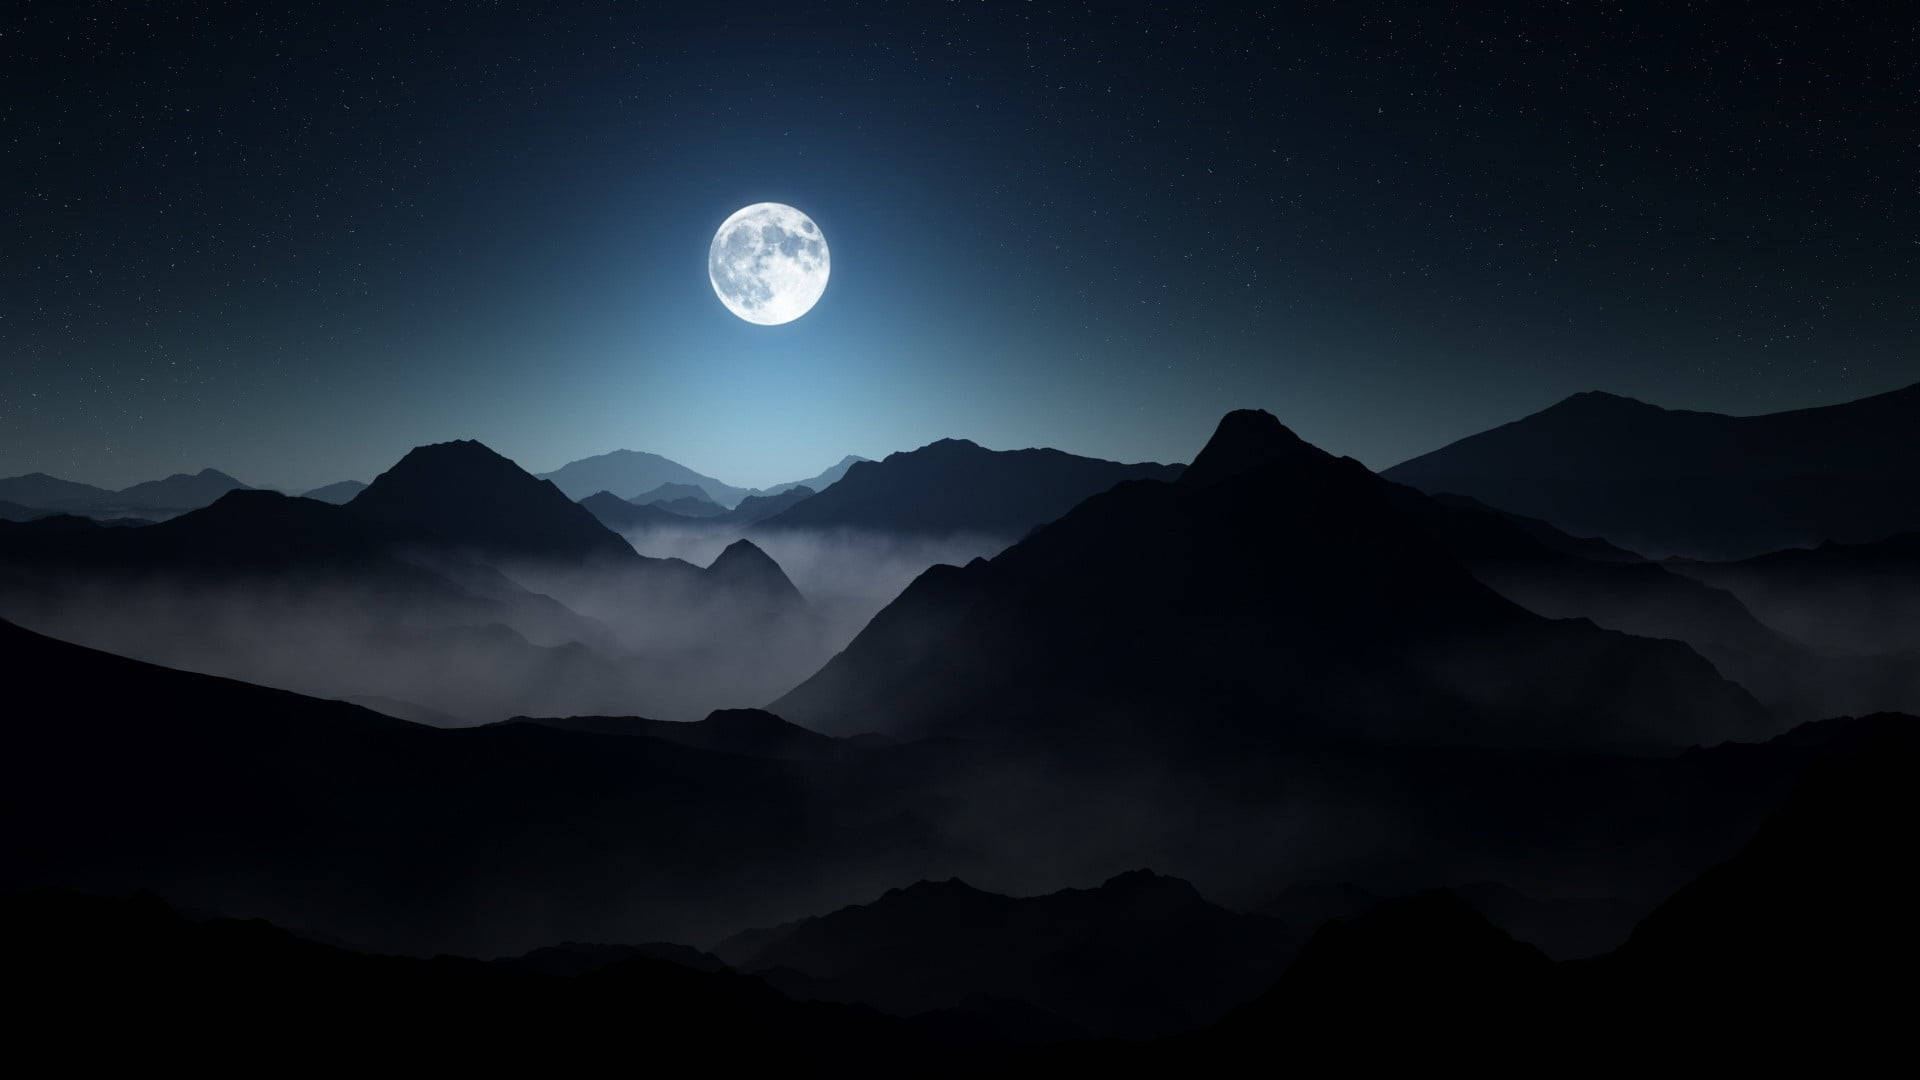 Dark Laptop Moon In Mountains At Night Background